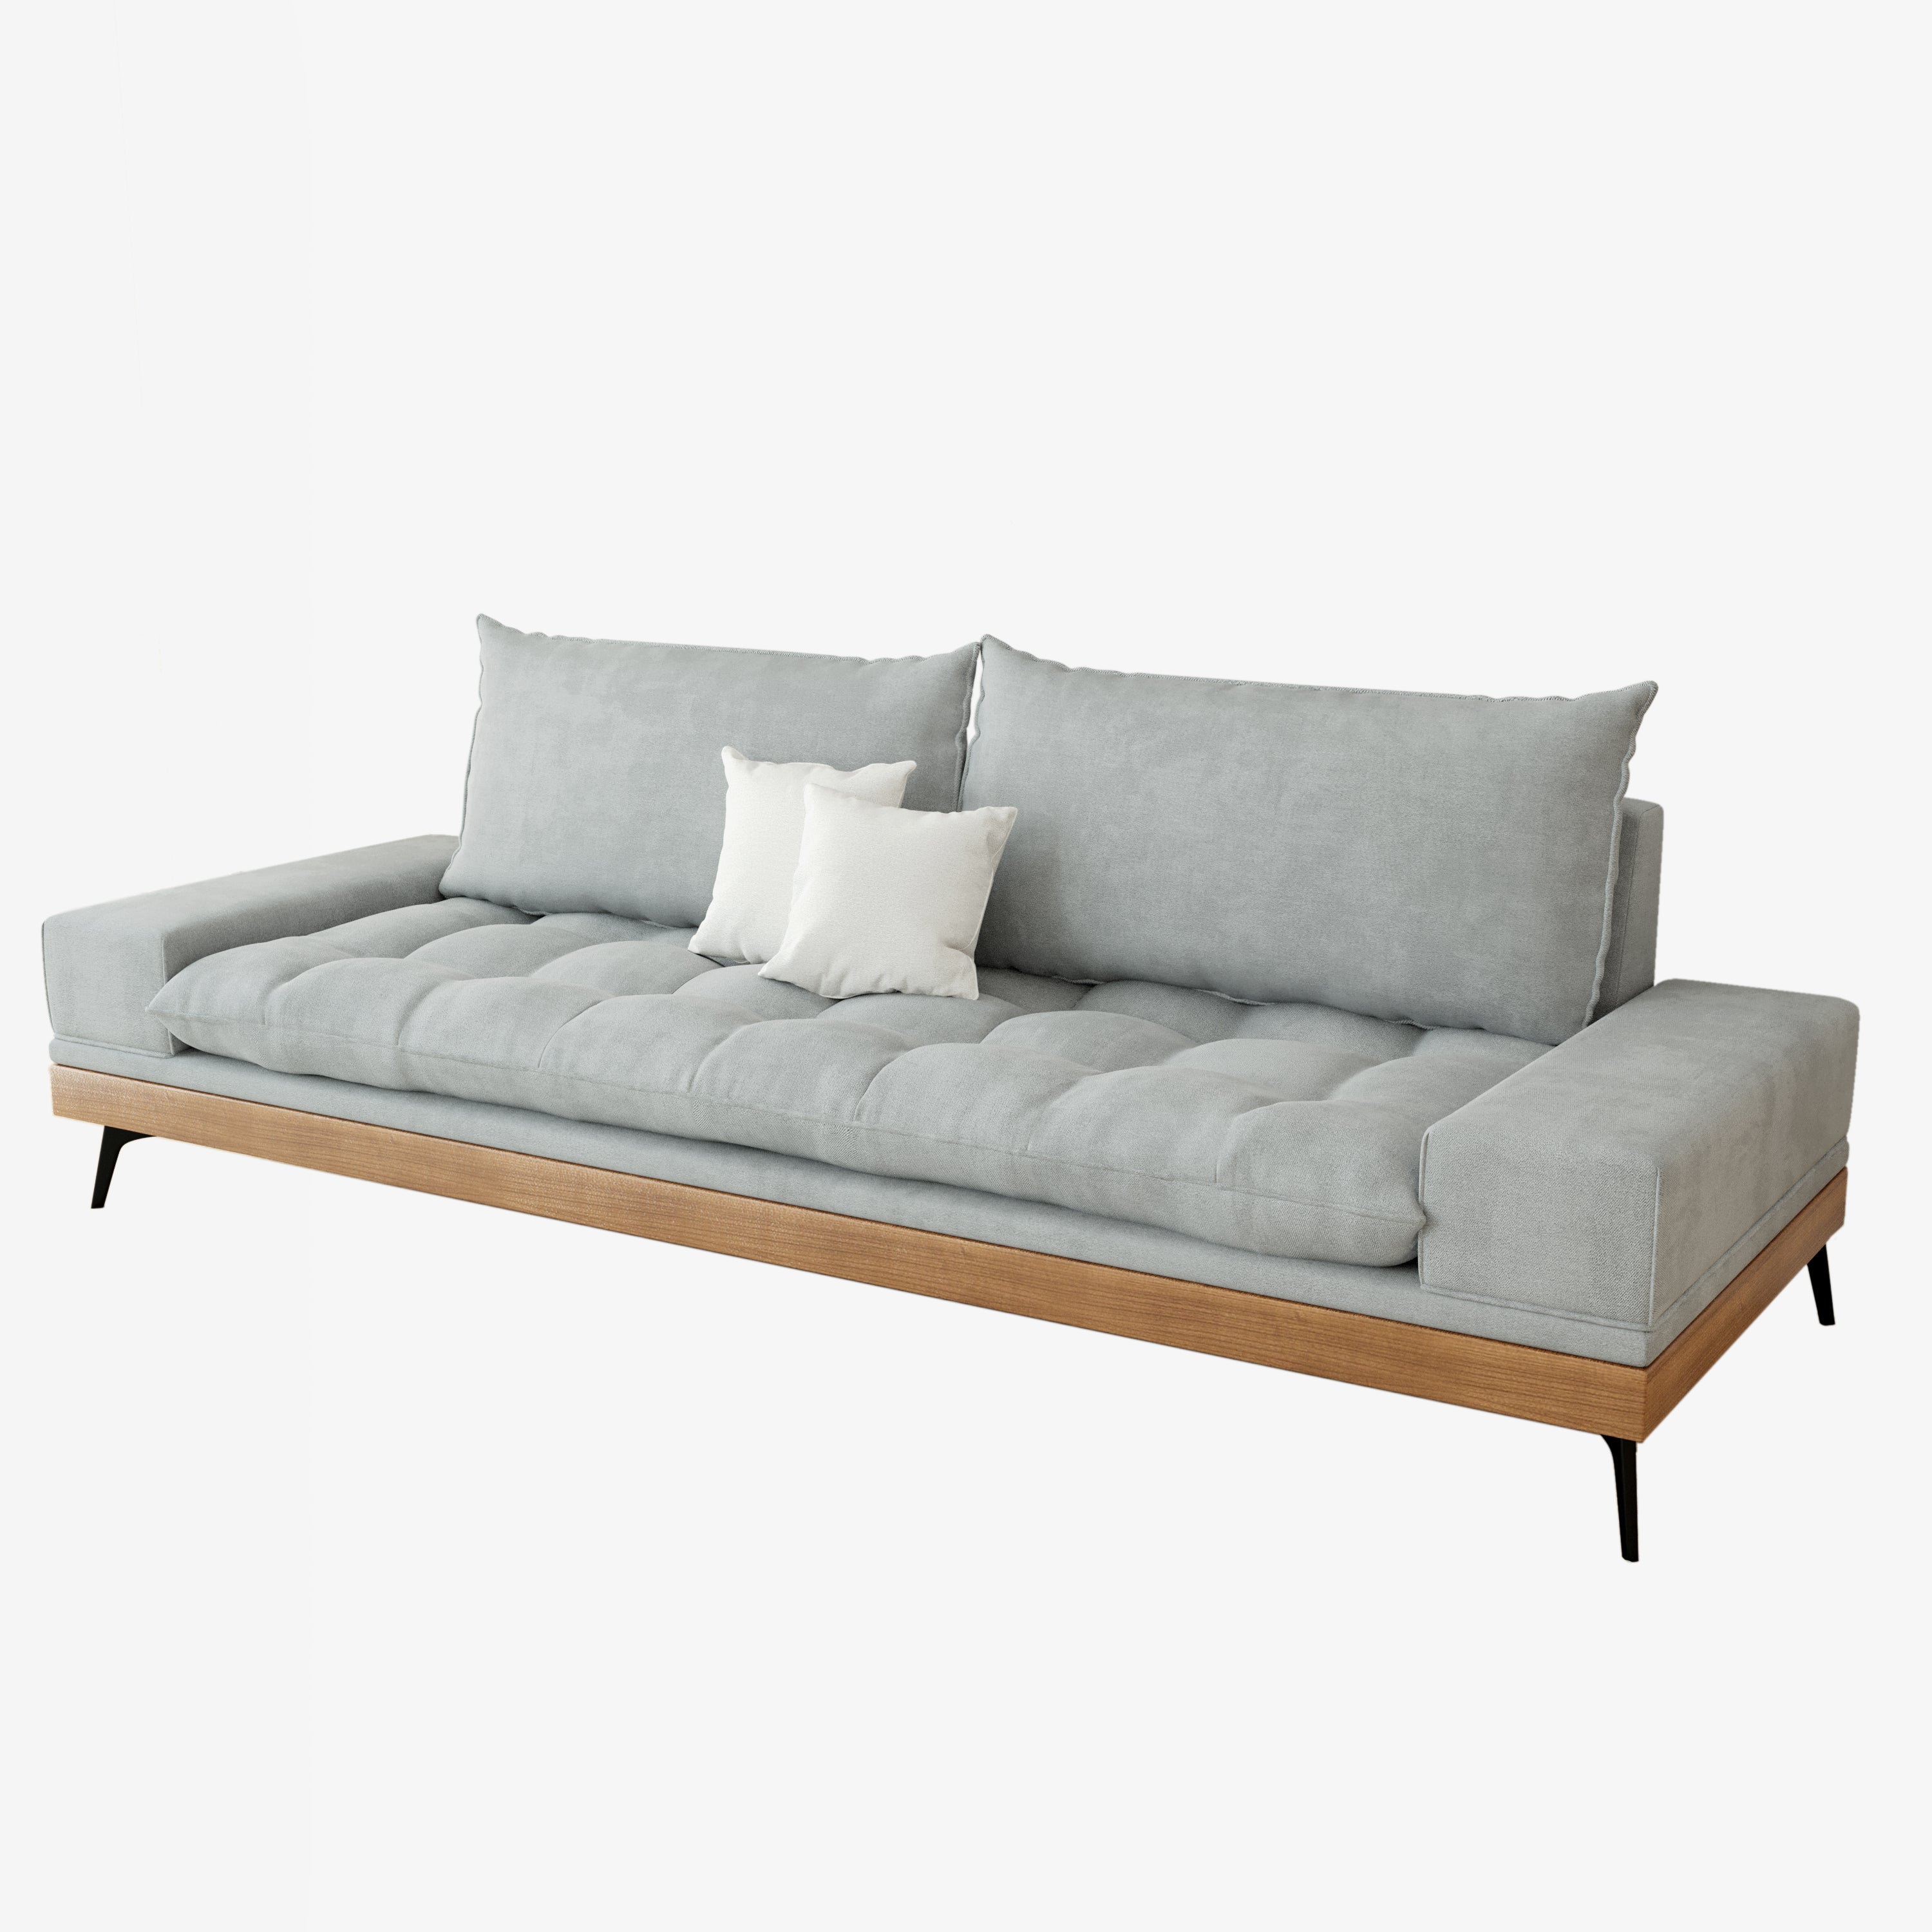 Manzanalit- ספה תלת מושבית עם צוקל עץ מלא